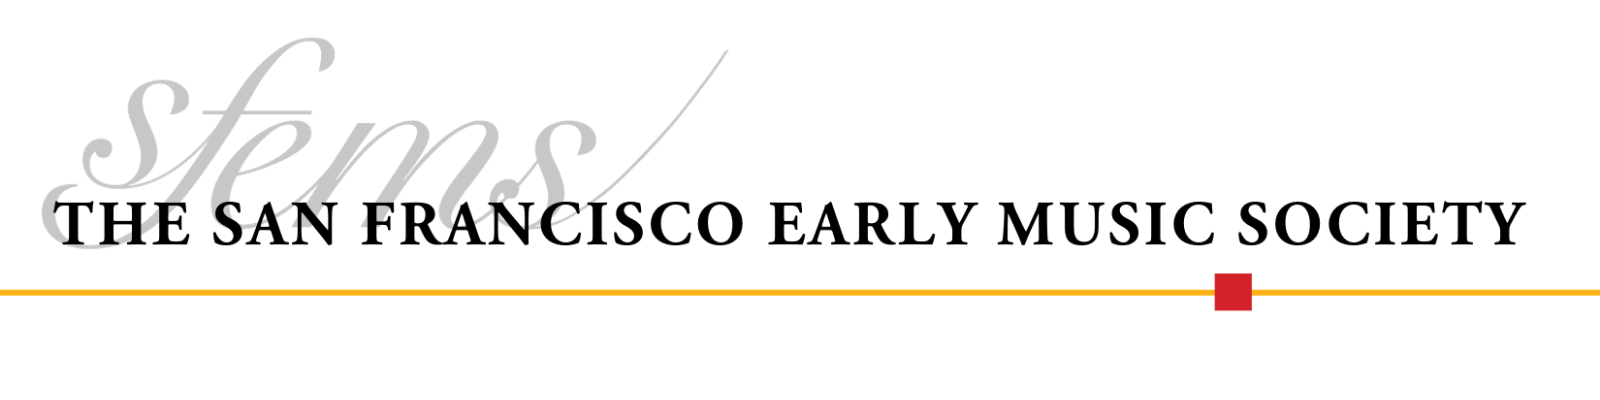 The San Francisco Early Music Society